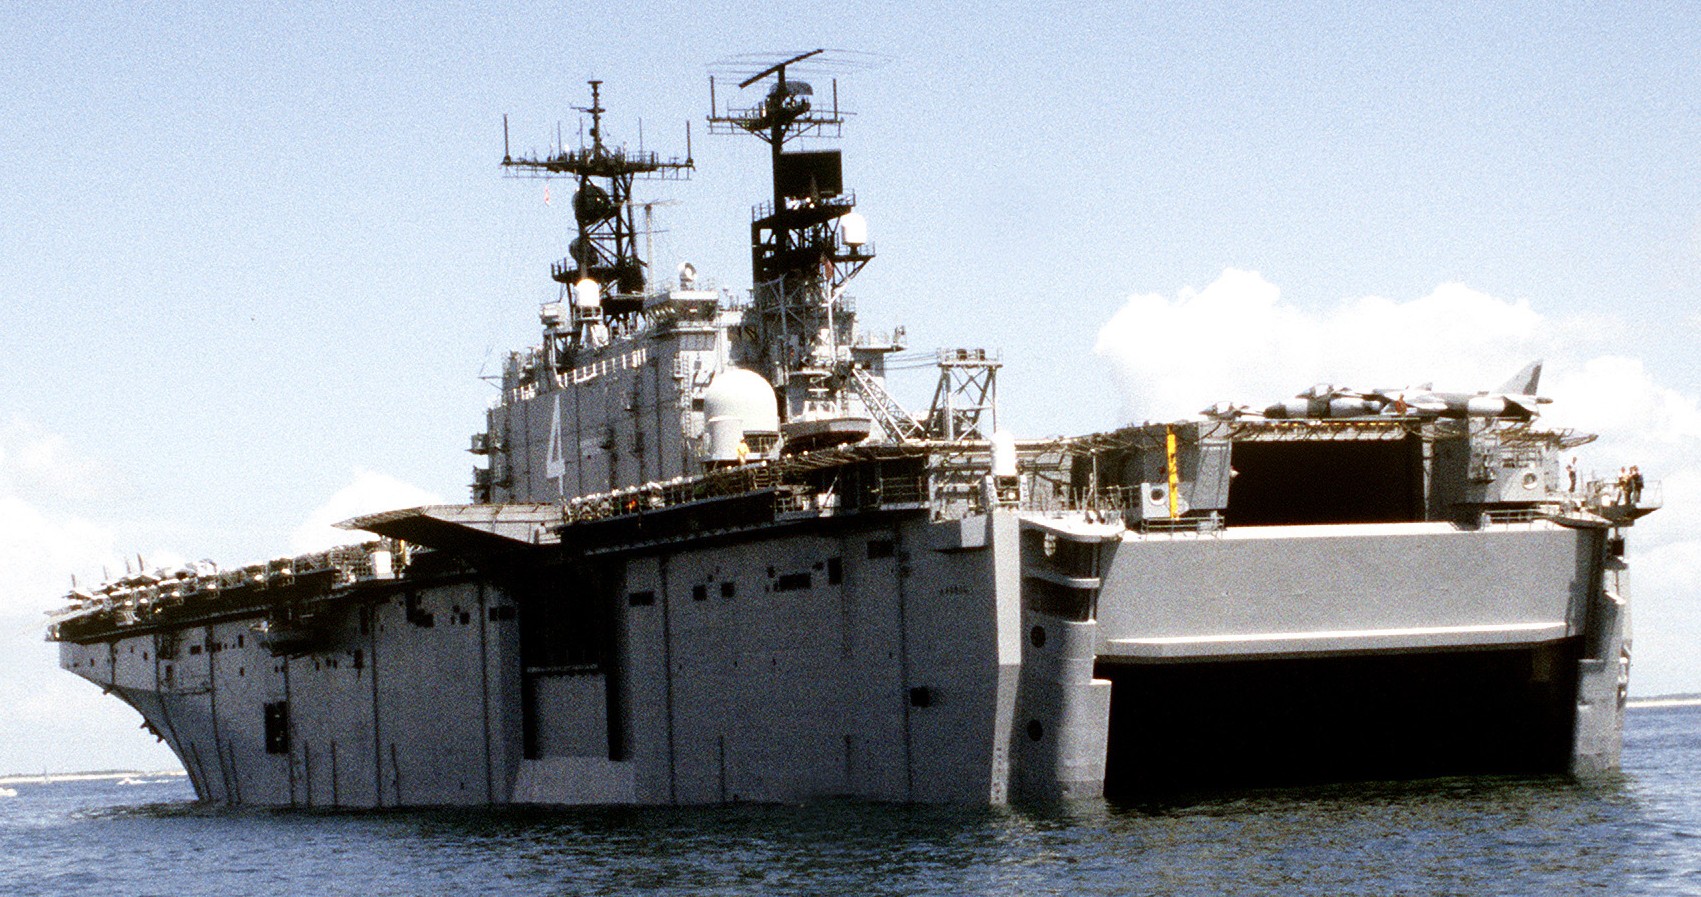 lha-4 uss nassau tarawa class amphibious assault ship us navy 125